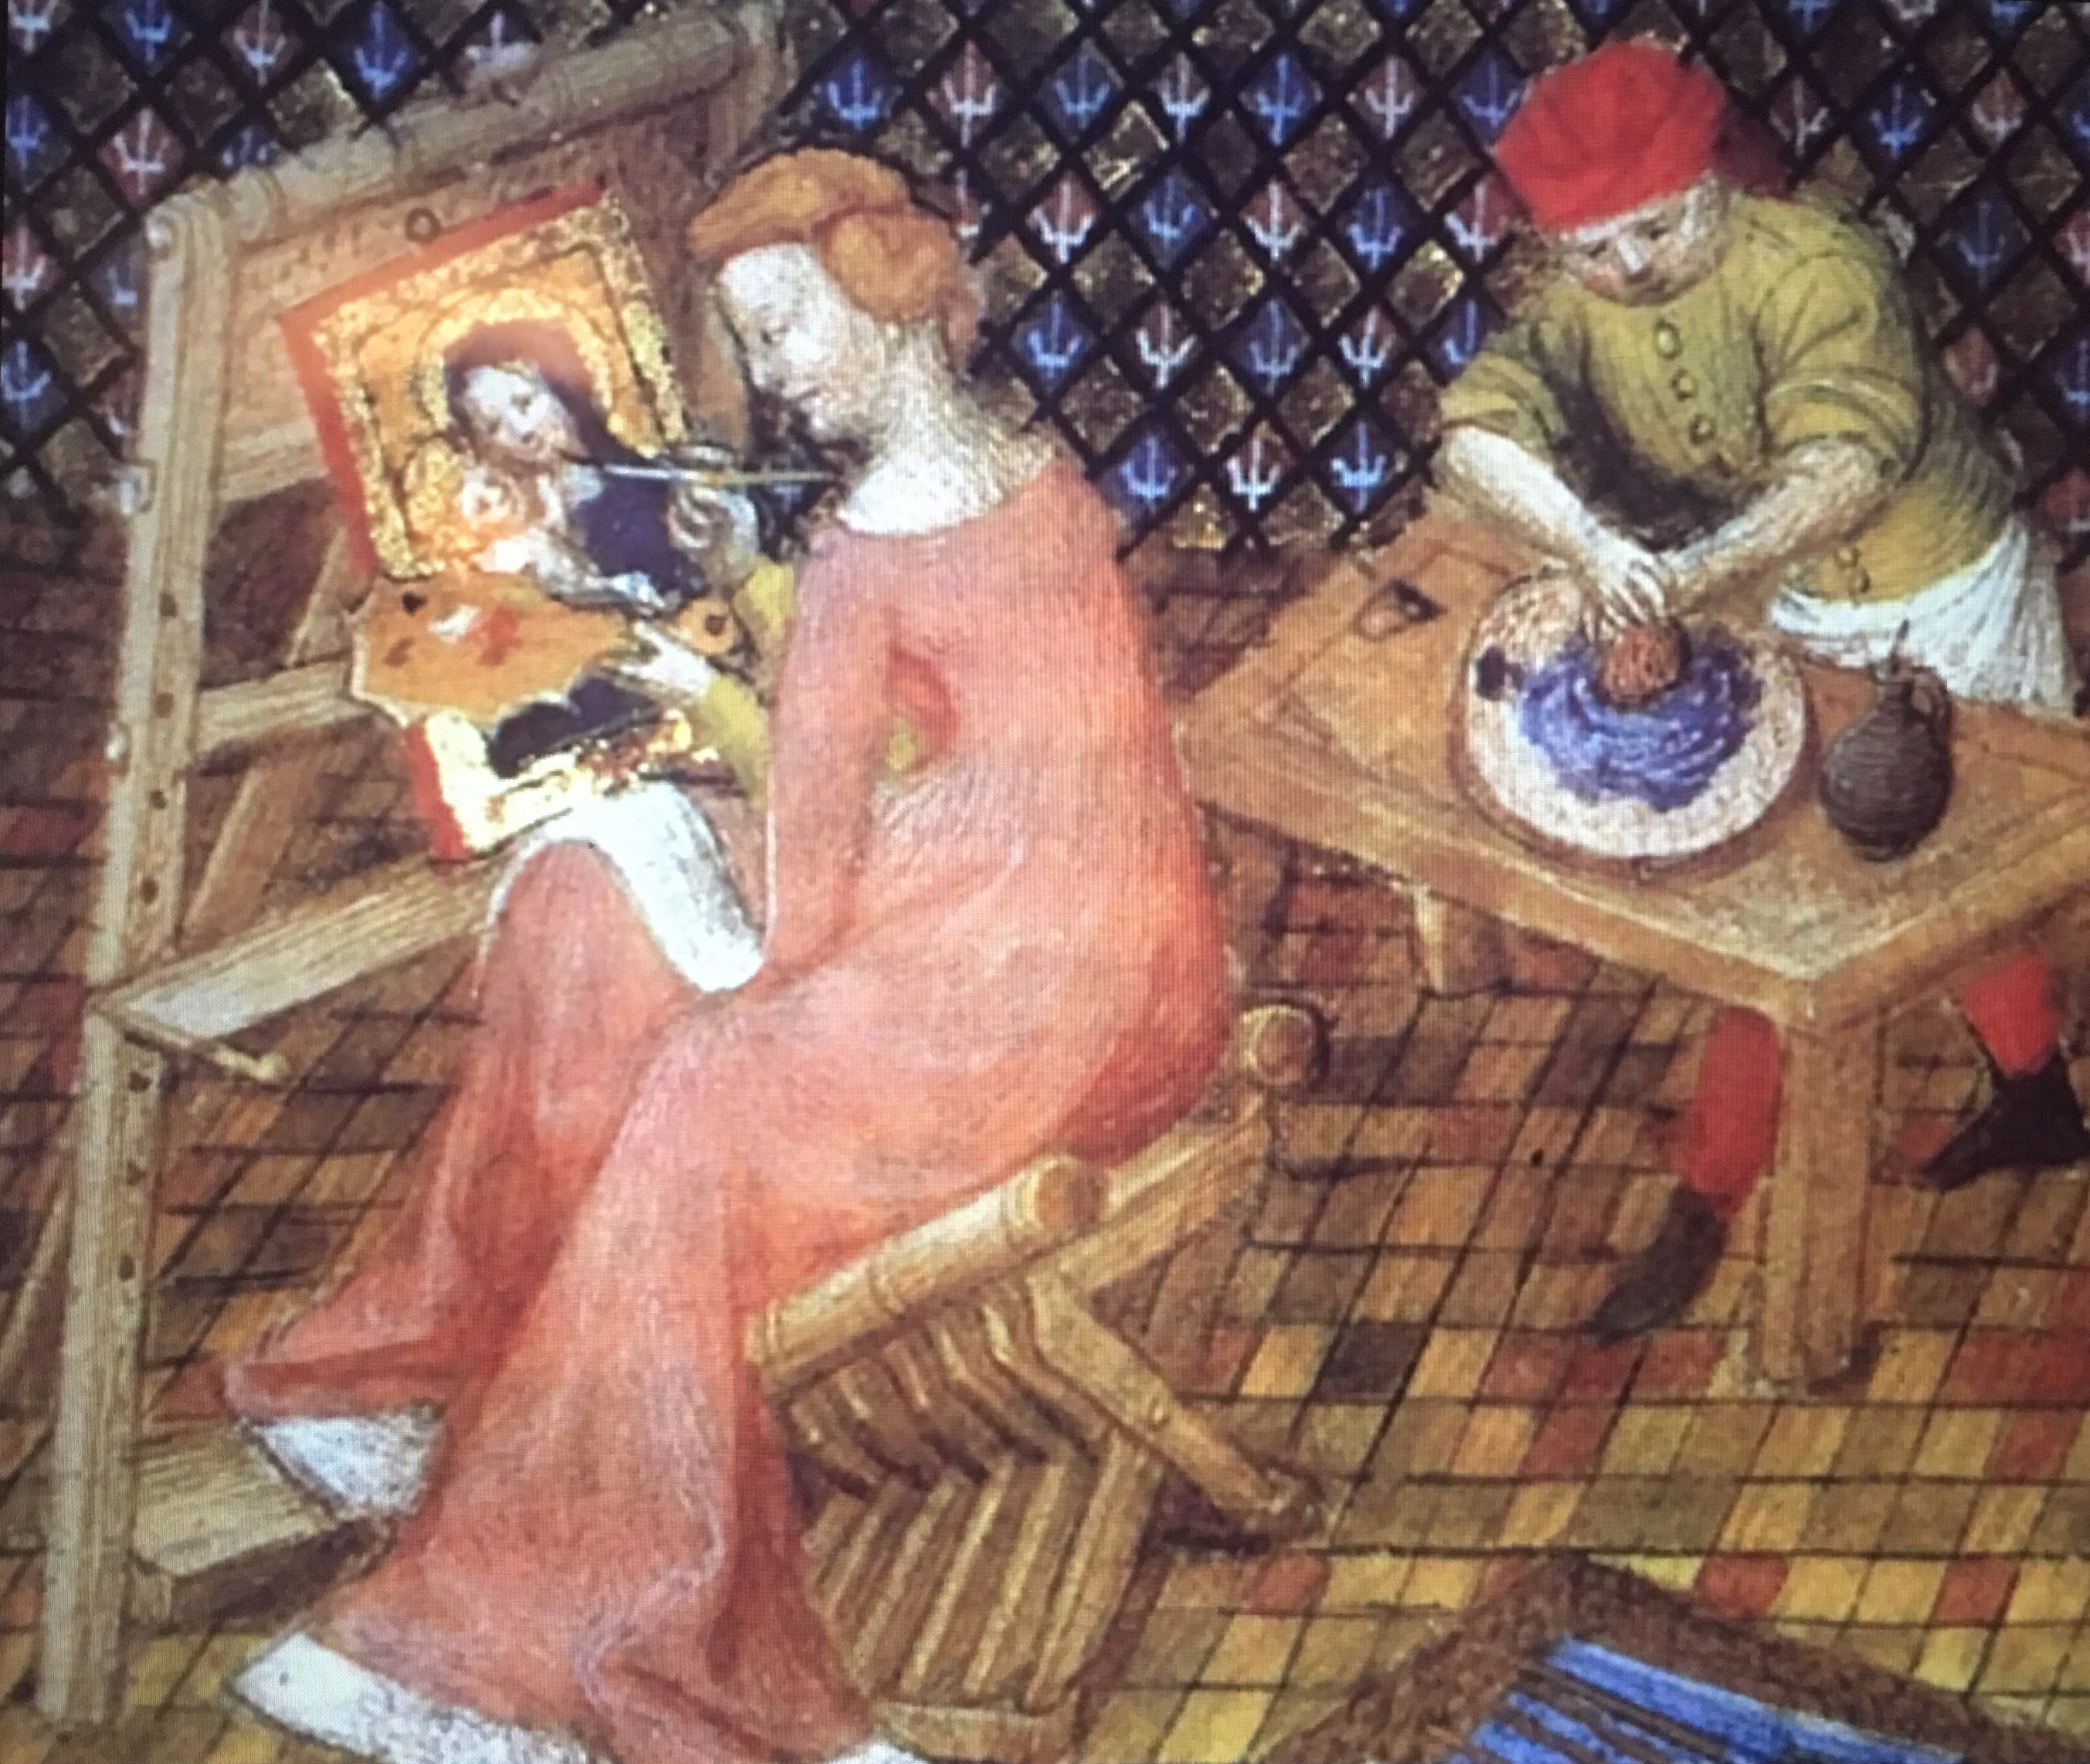 Medieval artist with apprentice preparing paint